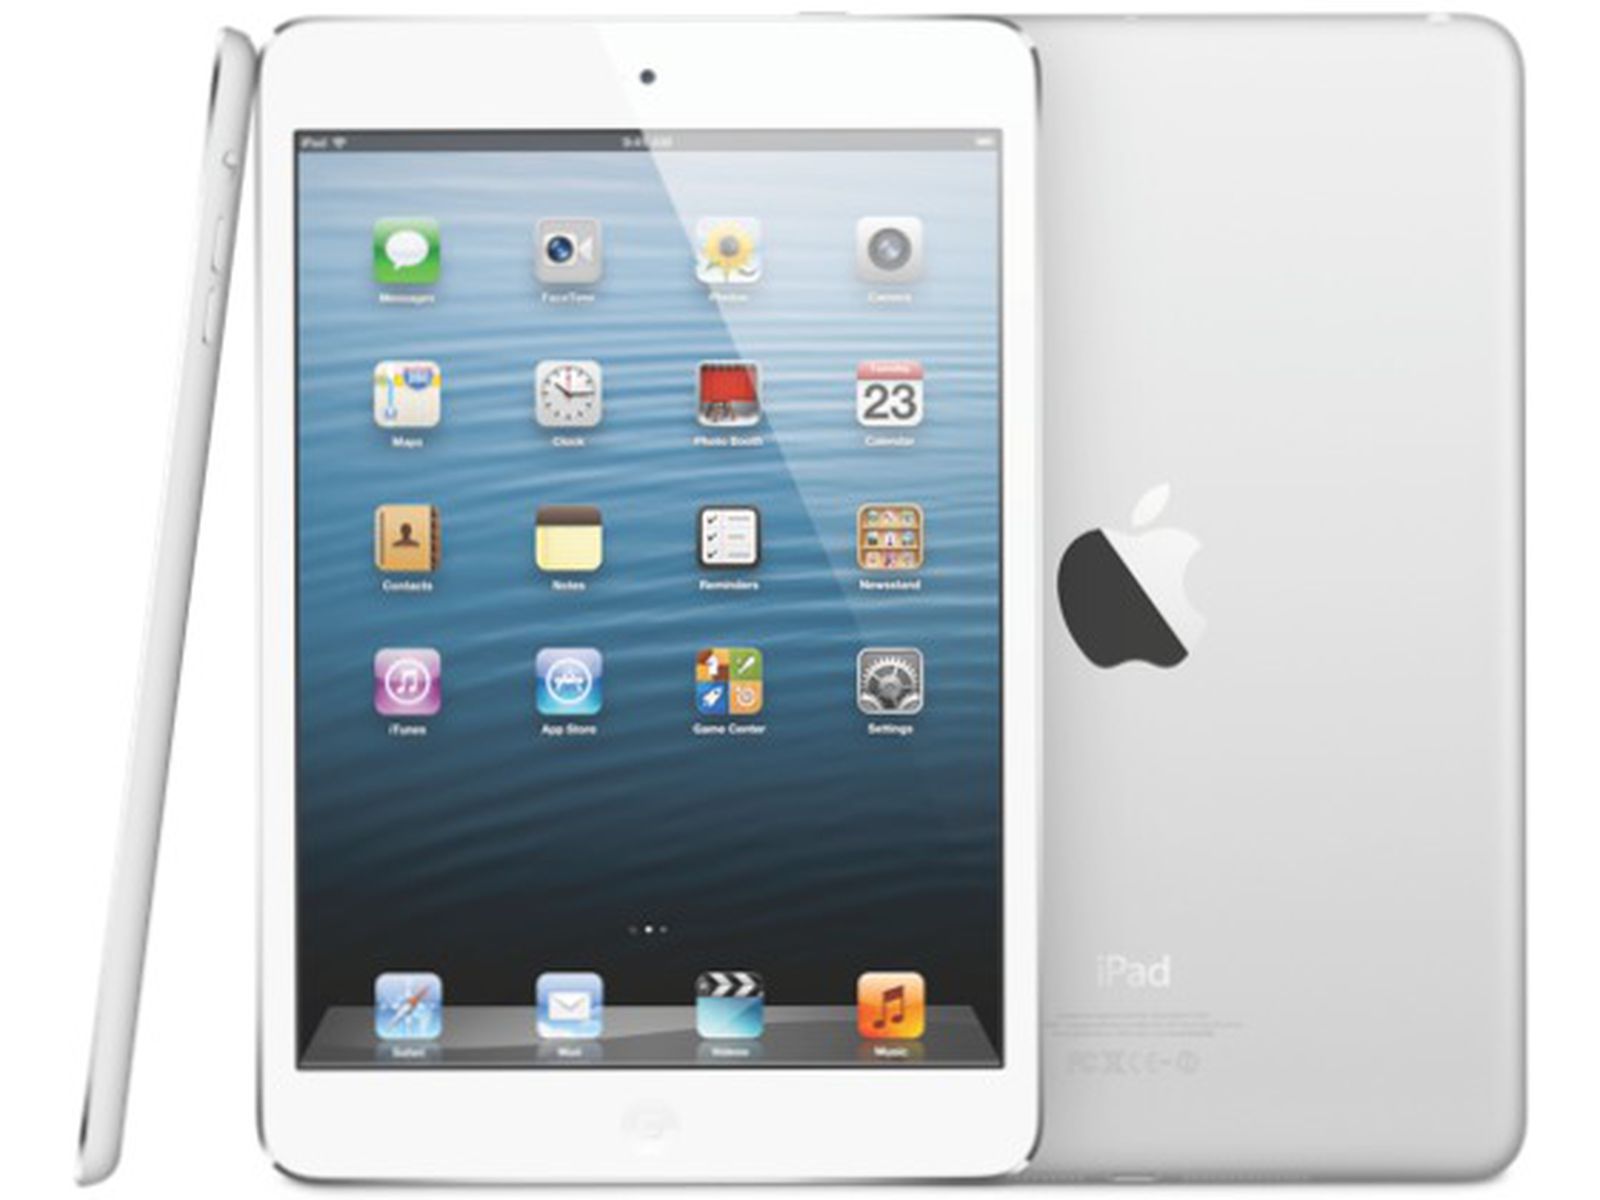 Udvalg serie Skænk Original iPad Mini From 2012 Now Considered 'Vintage' by Apple - MacRumors